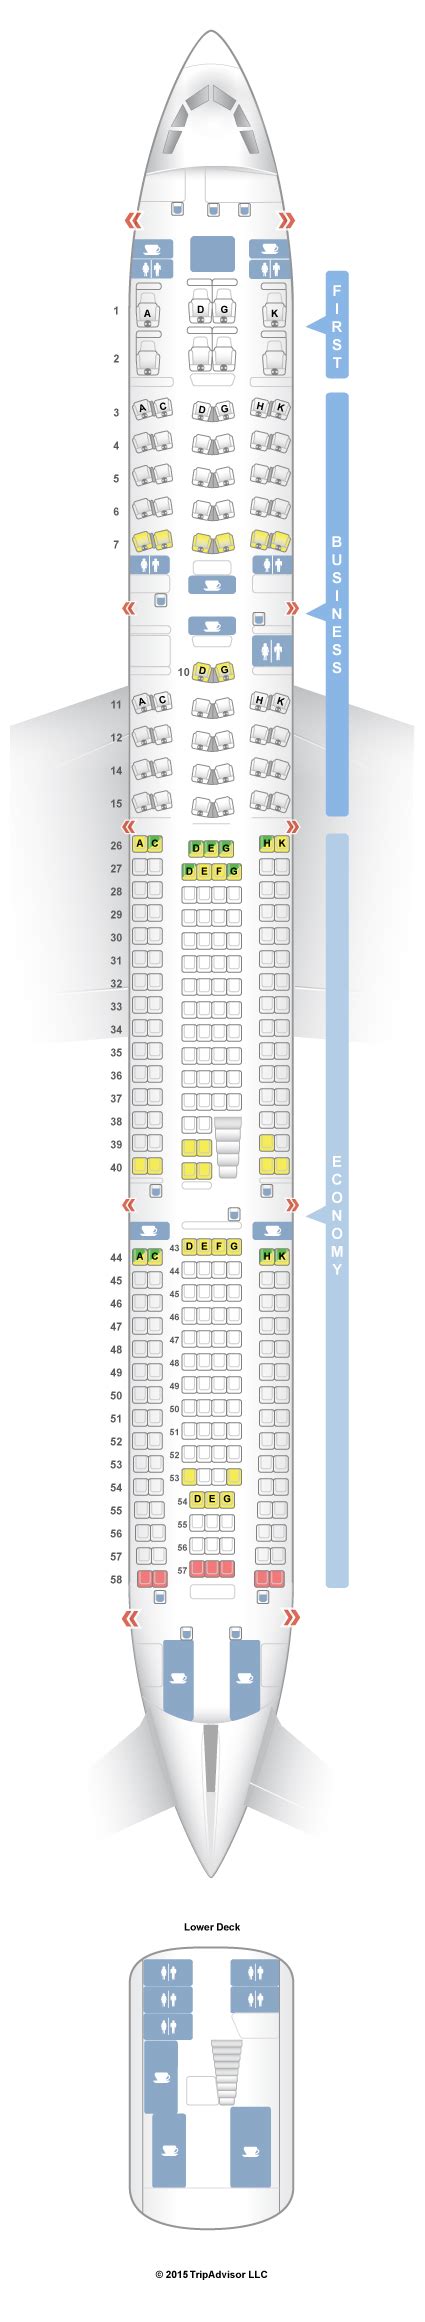 Seatguru Seat Map Lufthansa Airbus A340 600 346 V2 Seatguru Map